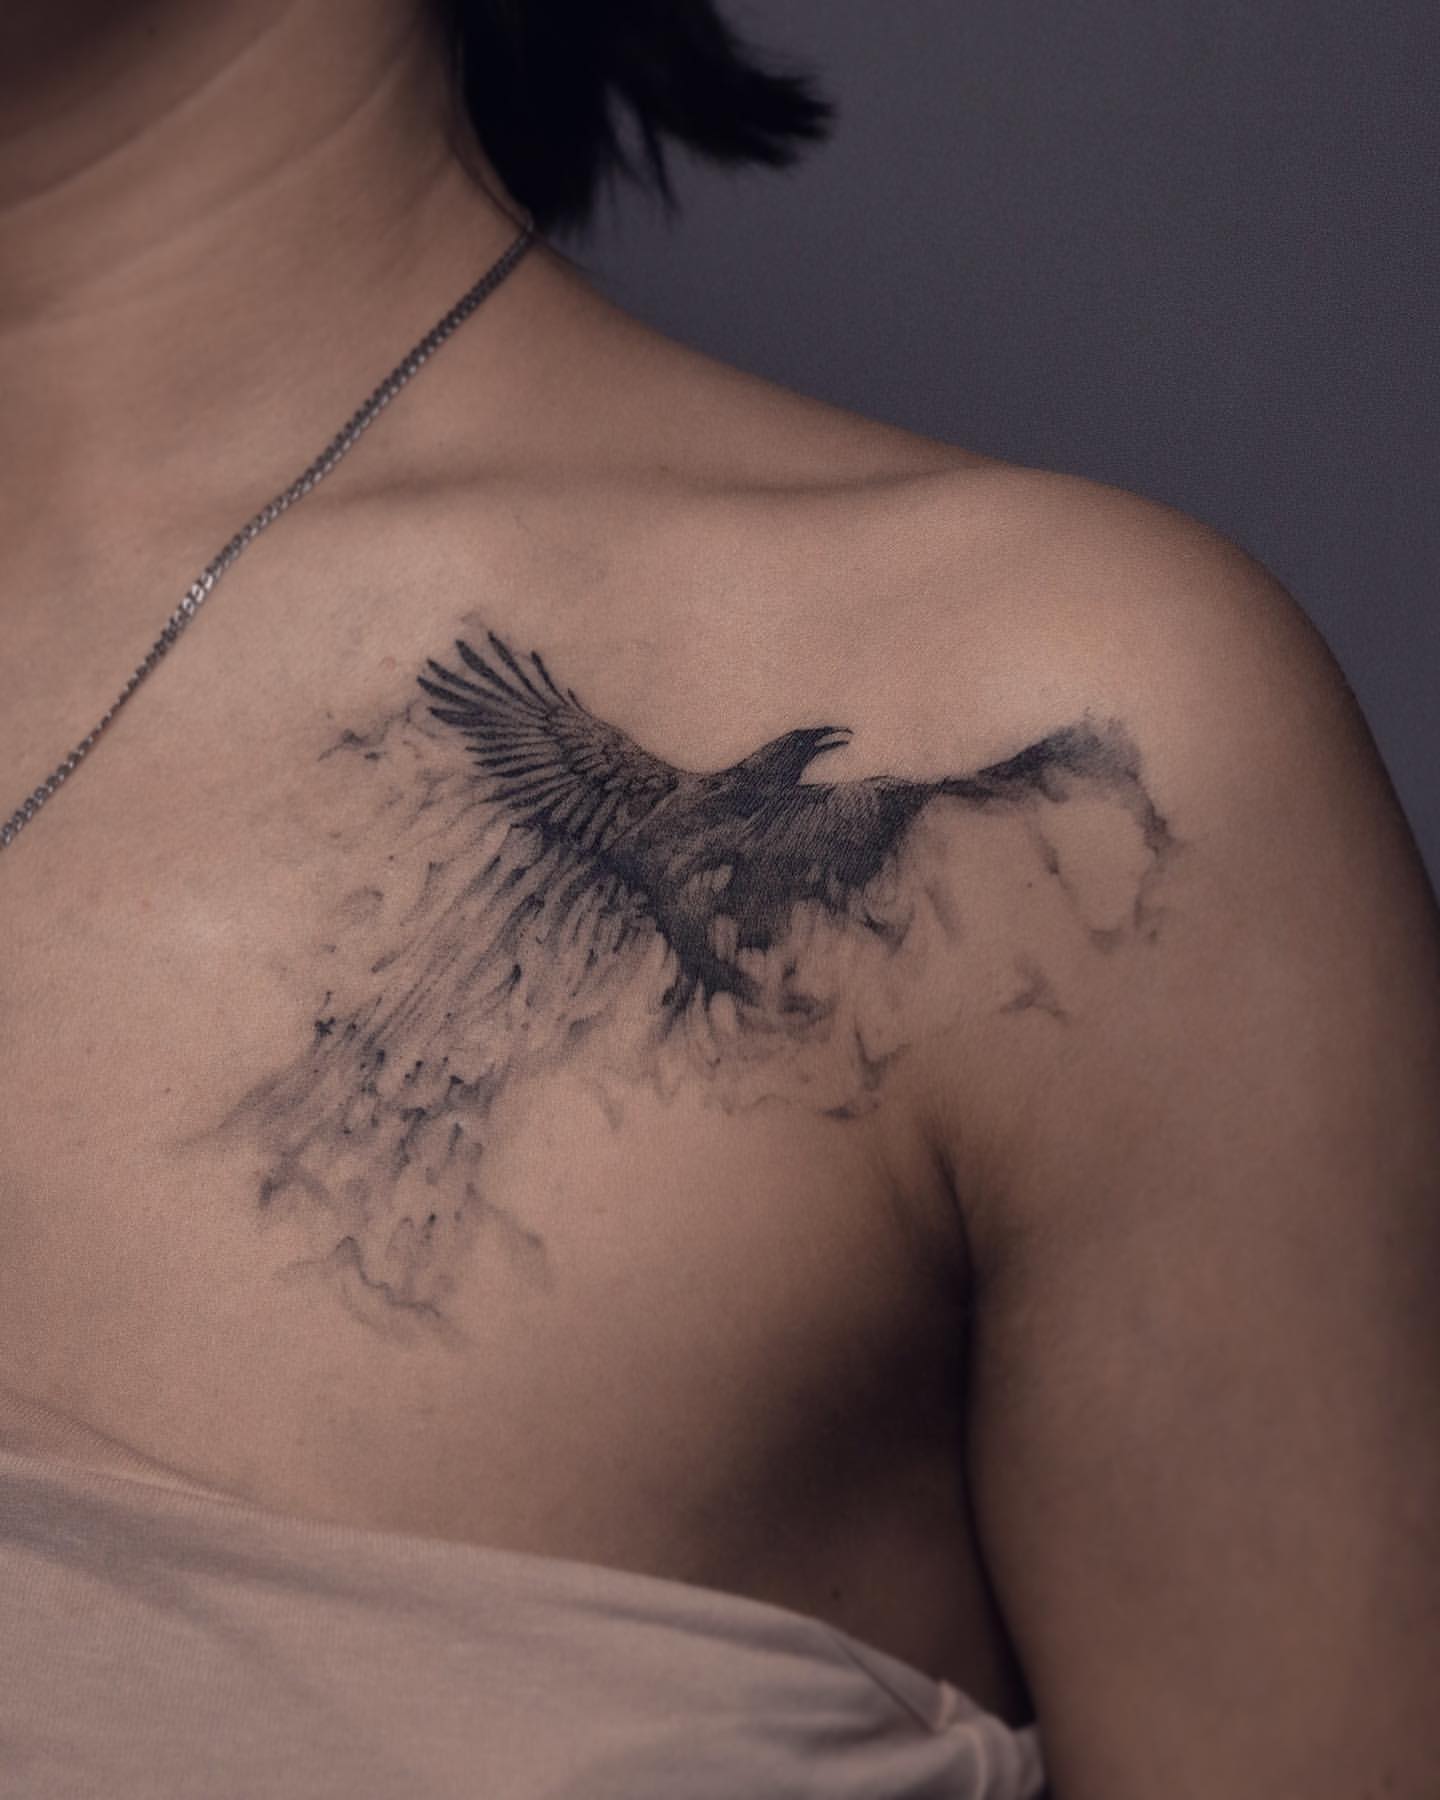 Um beijaflor bebezíneo  beijaflor passaro hummingbird  hummingbirdtattoo bird birdtattoo tattooart  Bird tattoos for women  Trendy tattoos Hand tattoos